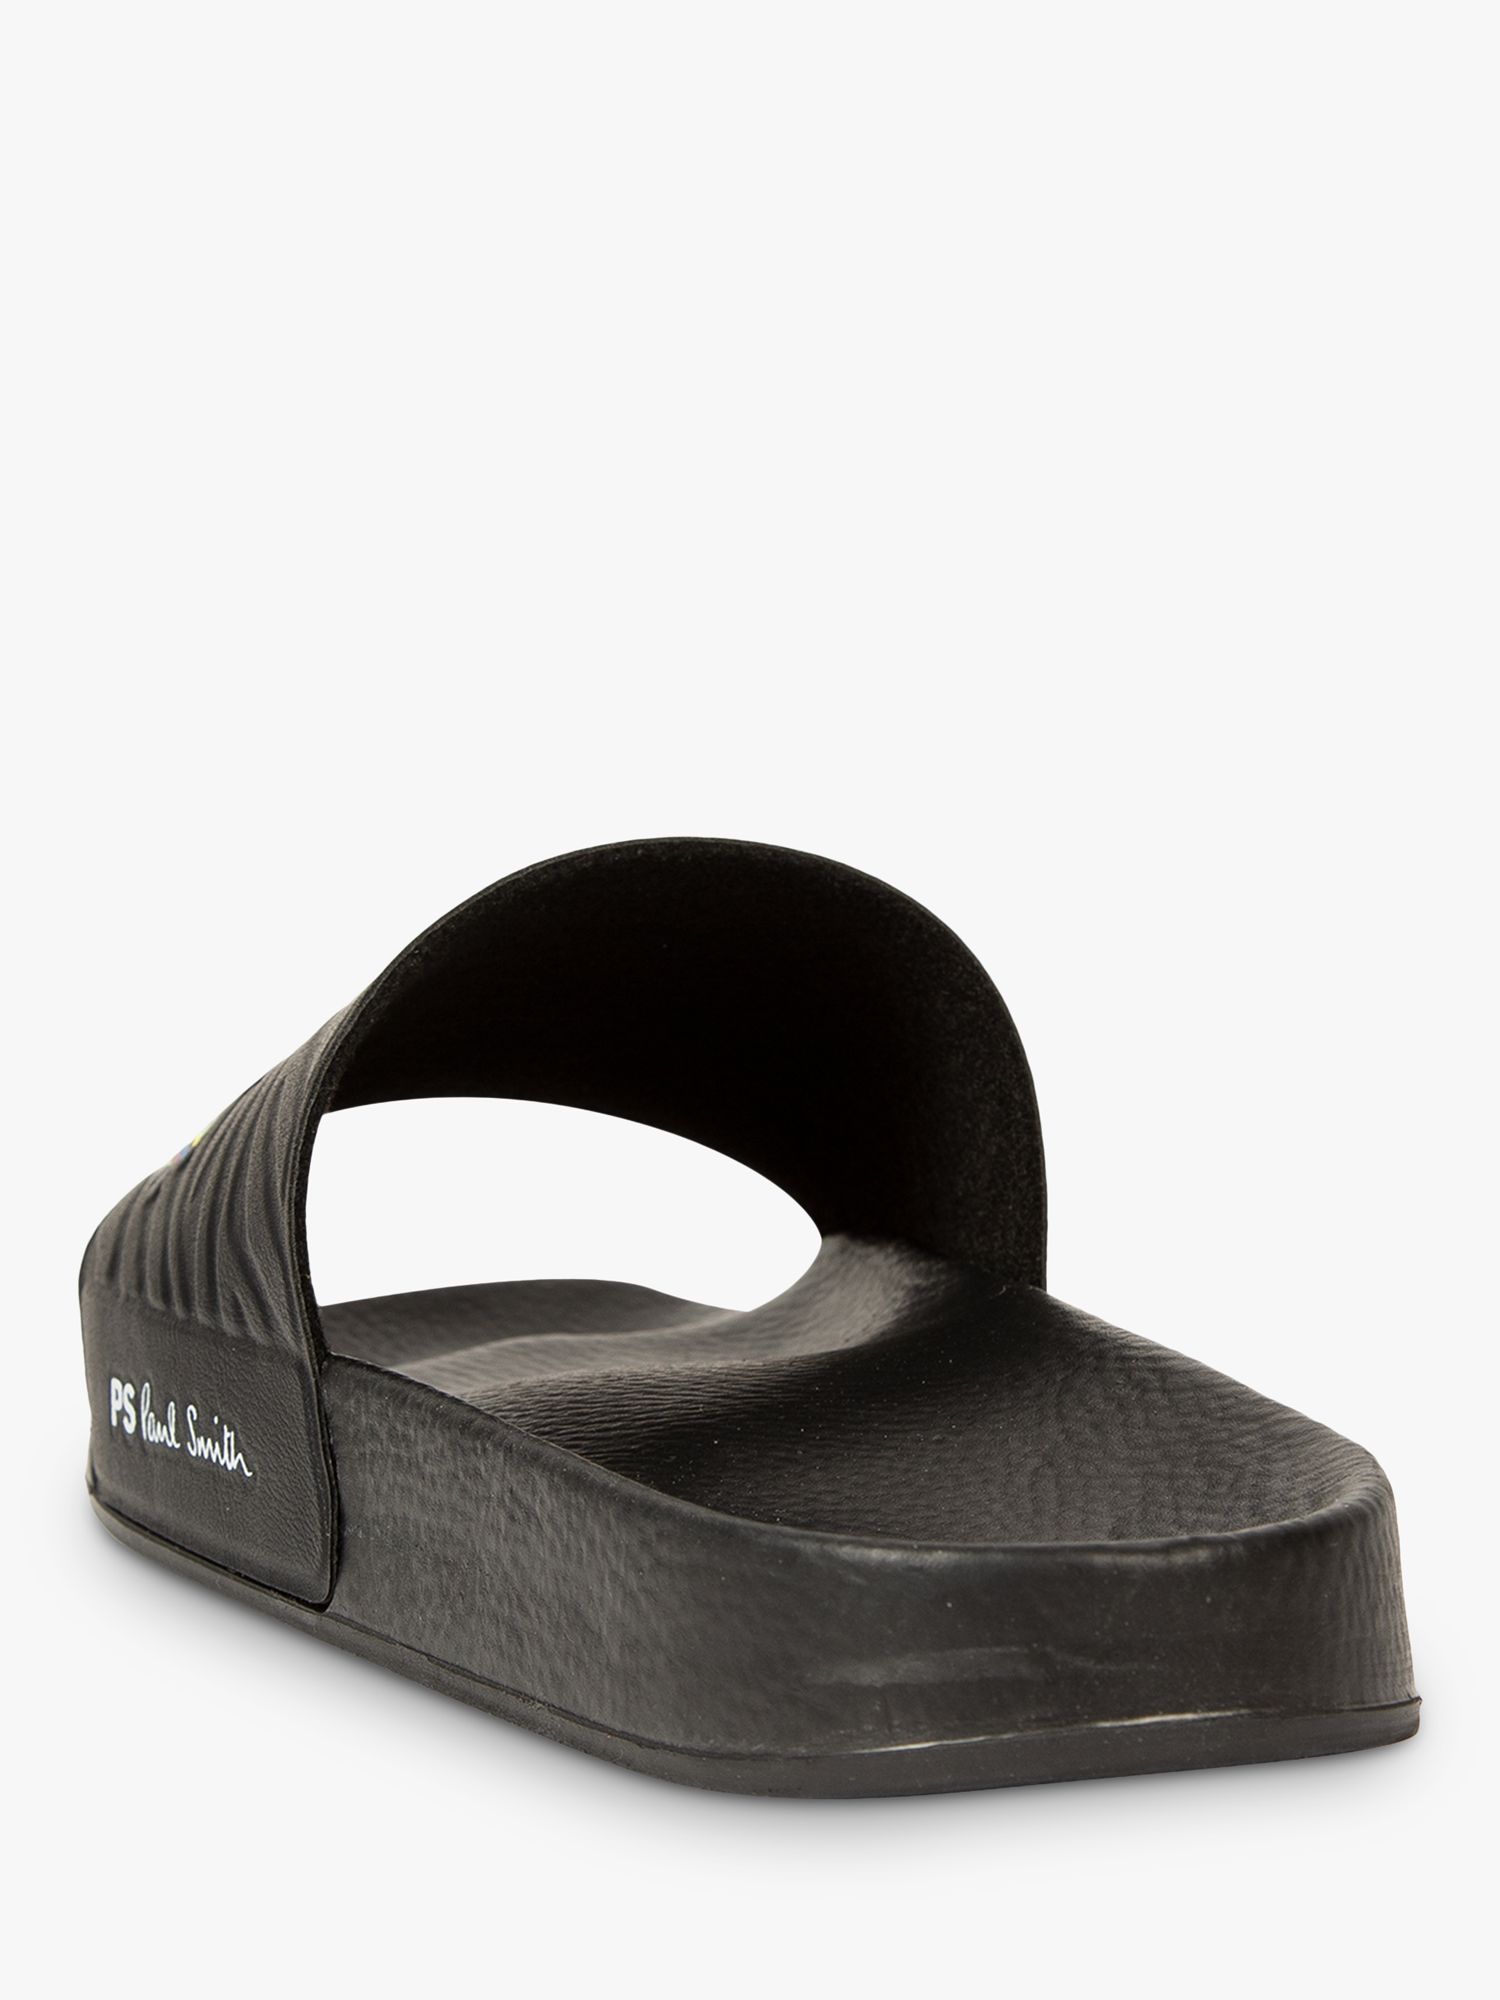 Paul Smith Nyro Slider Sandals, Black, 9